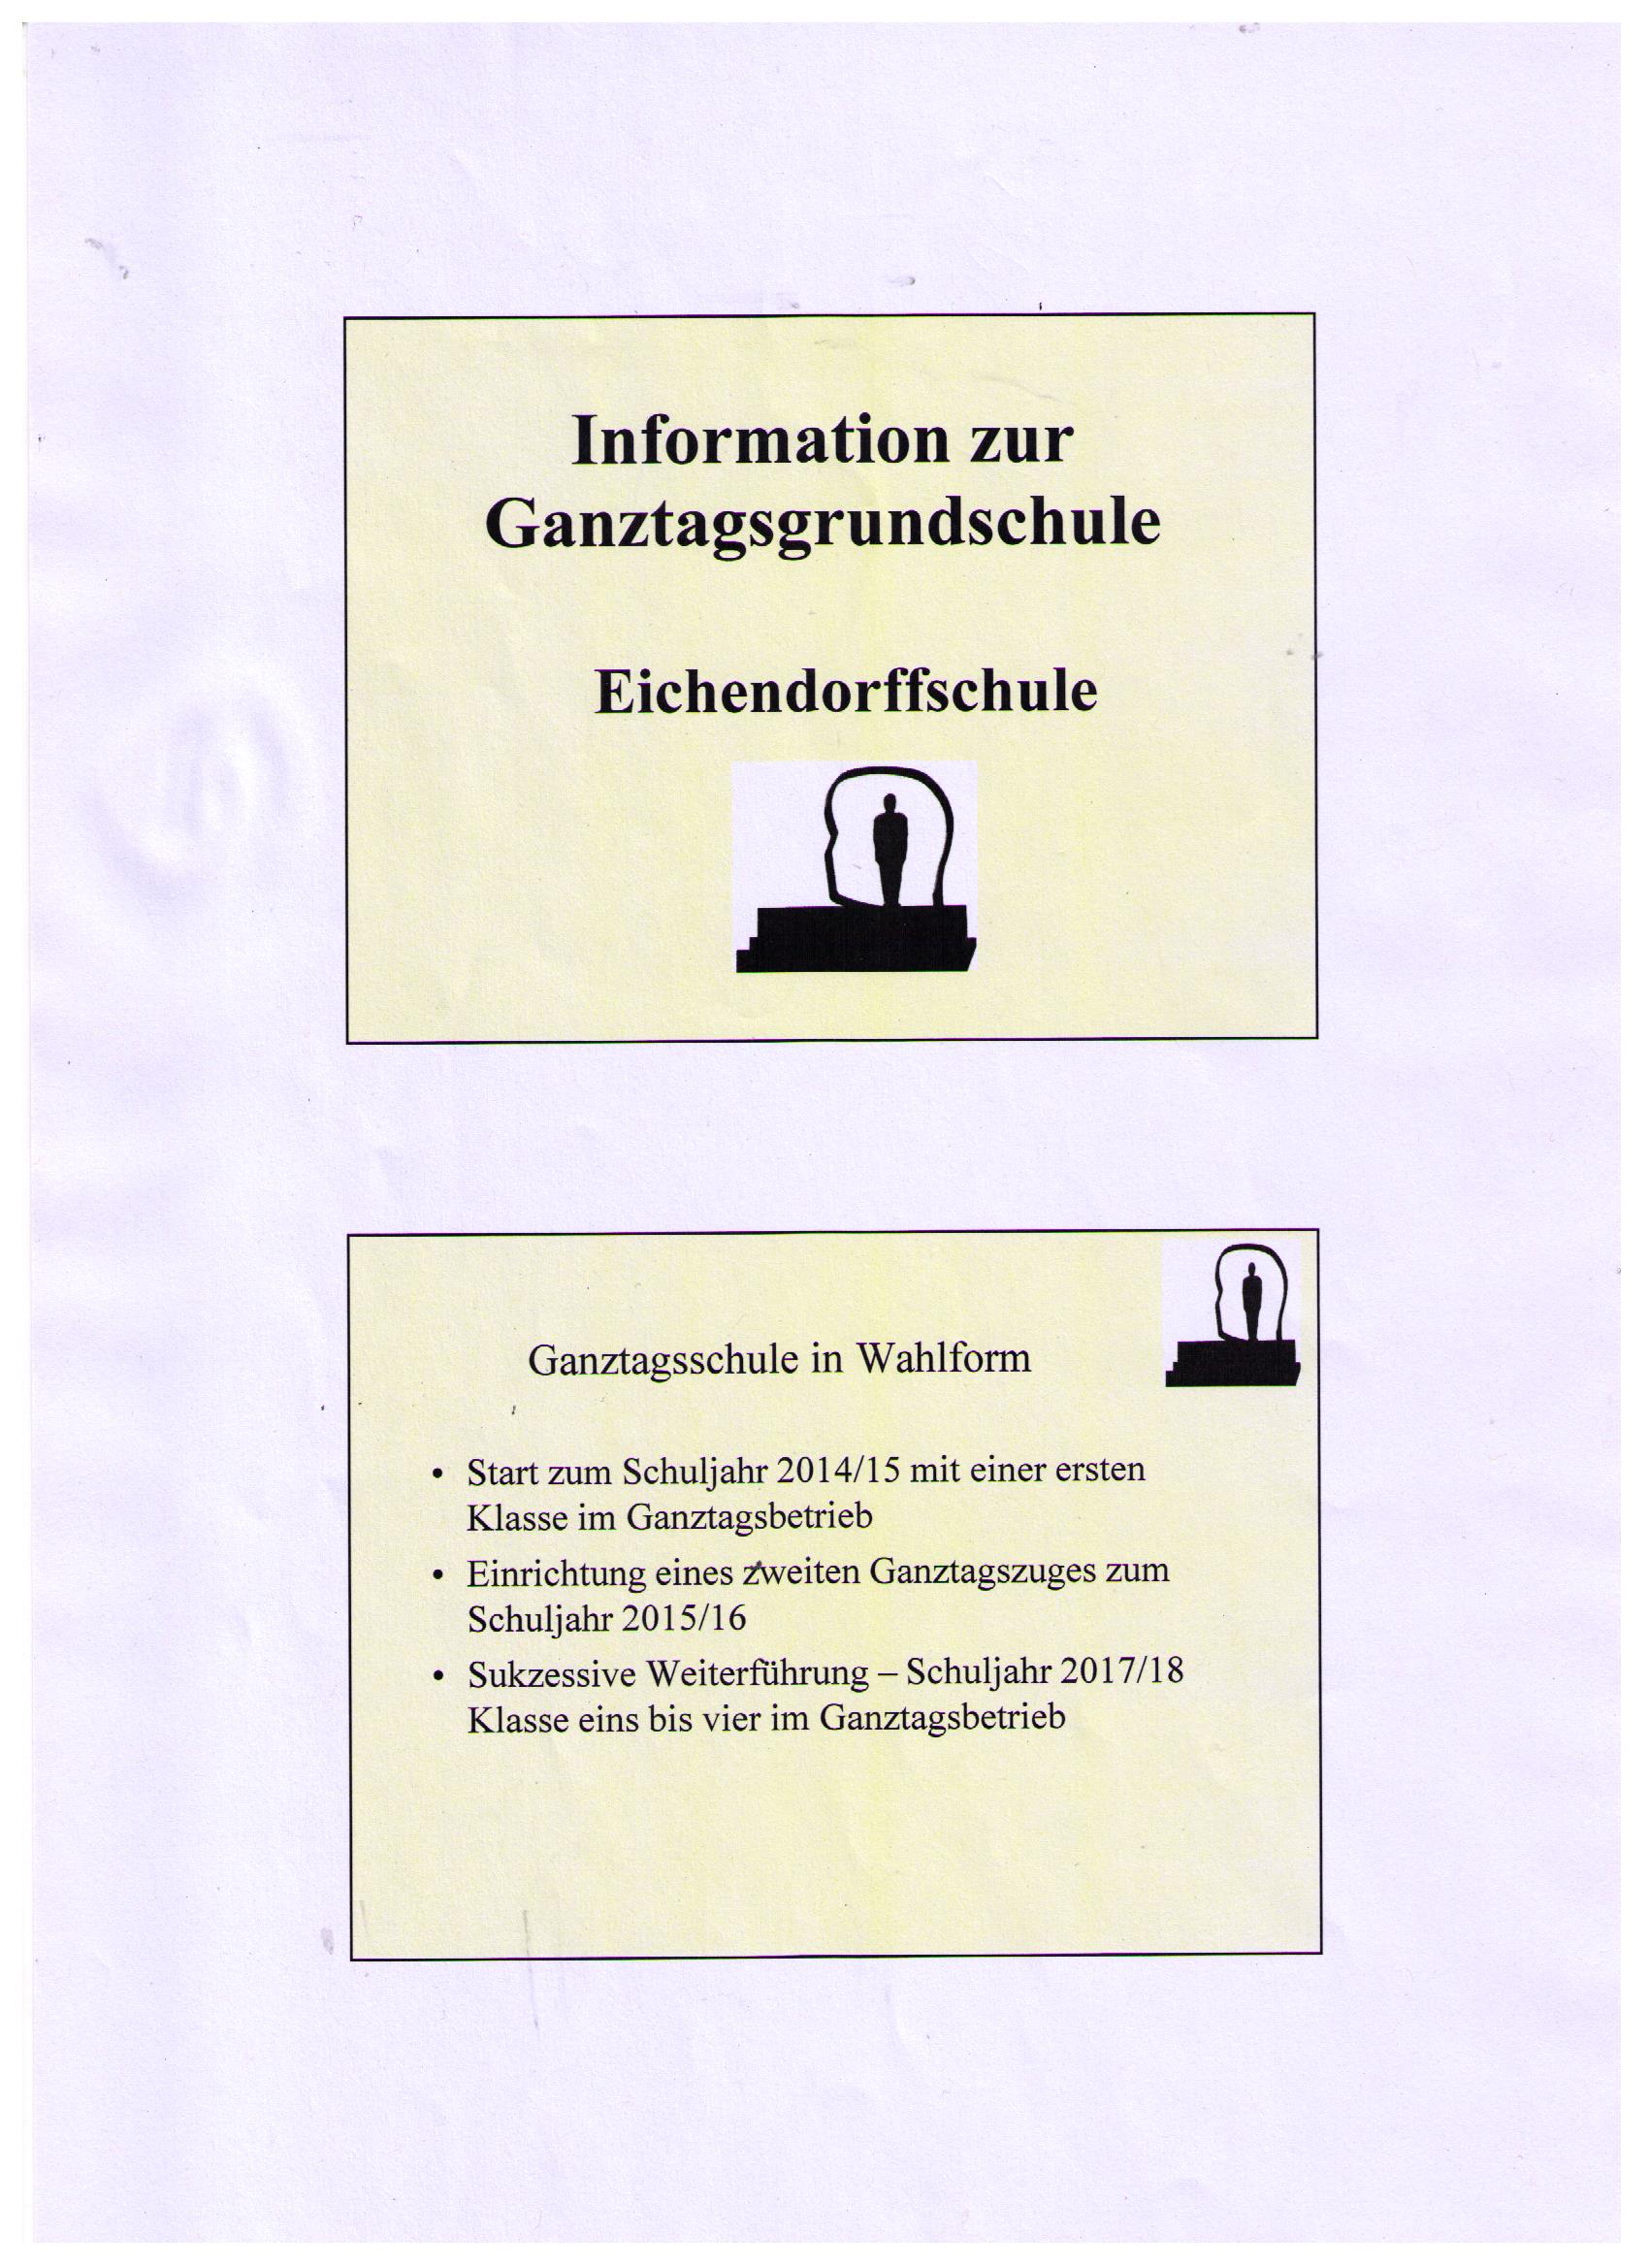 https://eichendorffschule.public-presentation-solutions.com/wp-content/uploads/2021/01/001-2.jpg